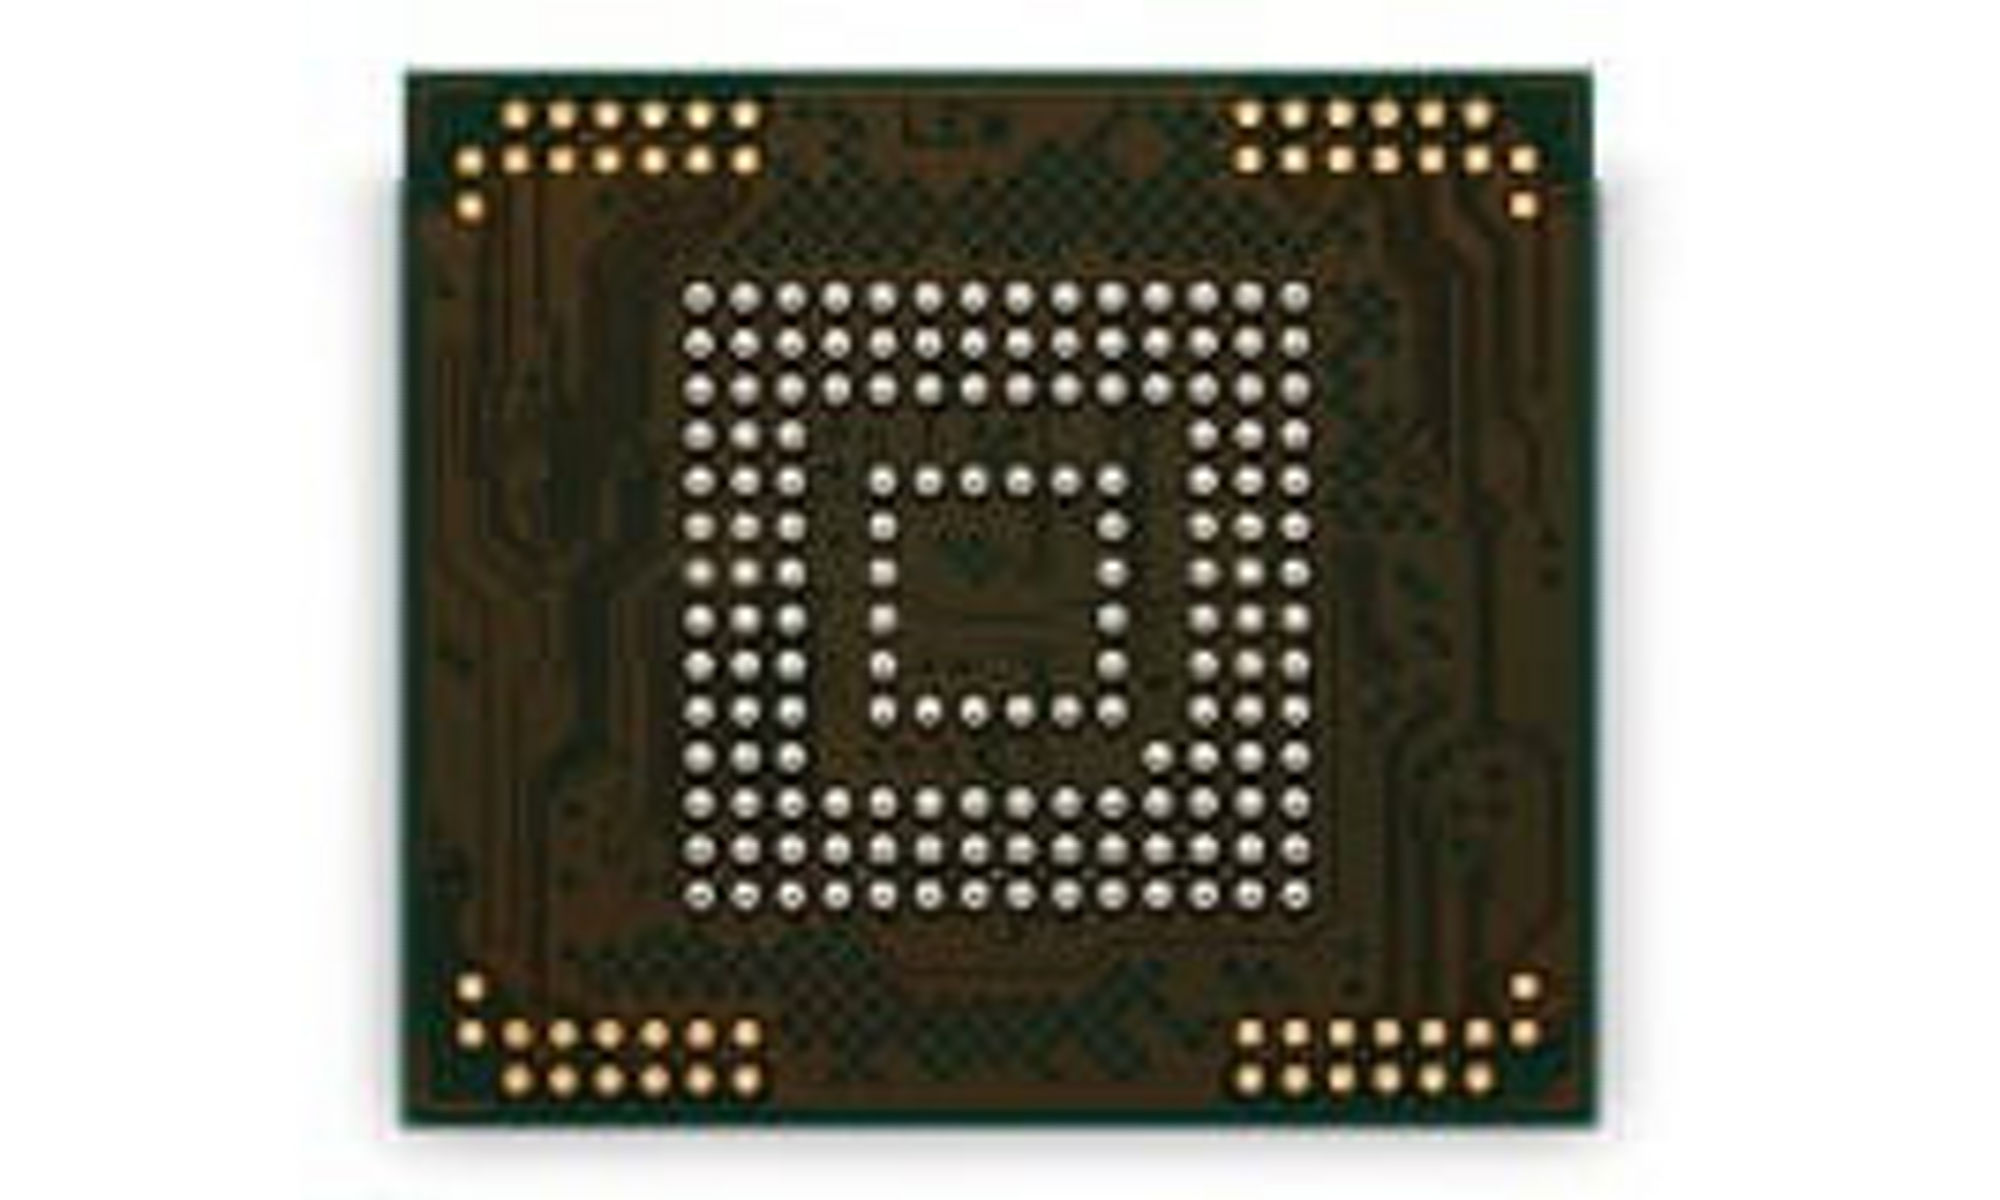 Micron 3D NAND flash component